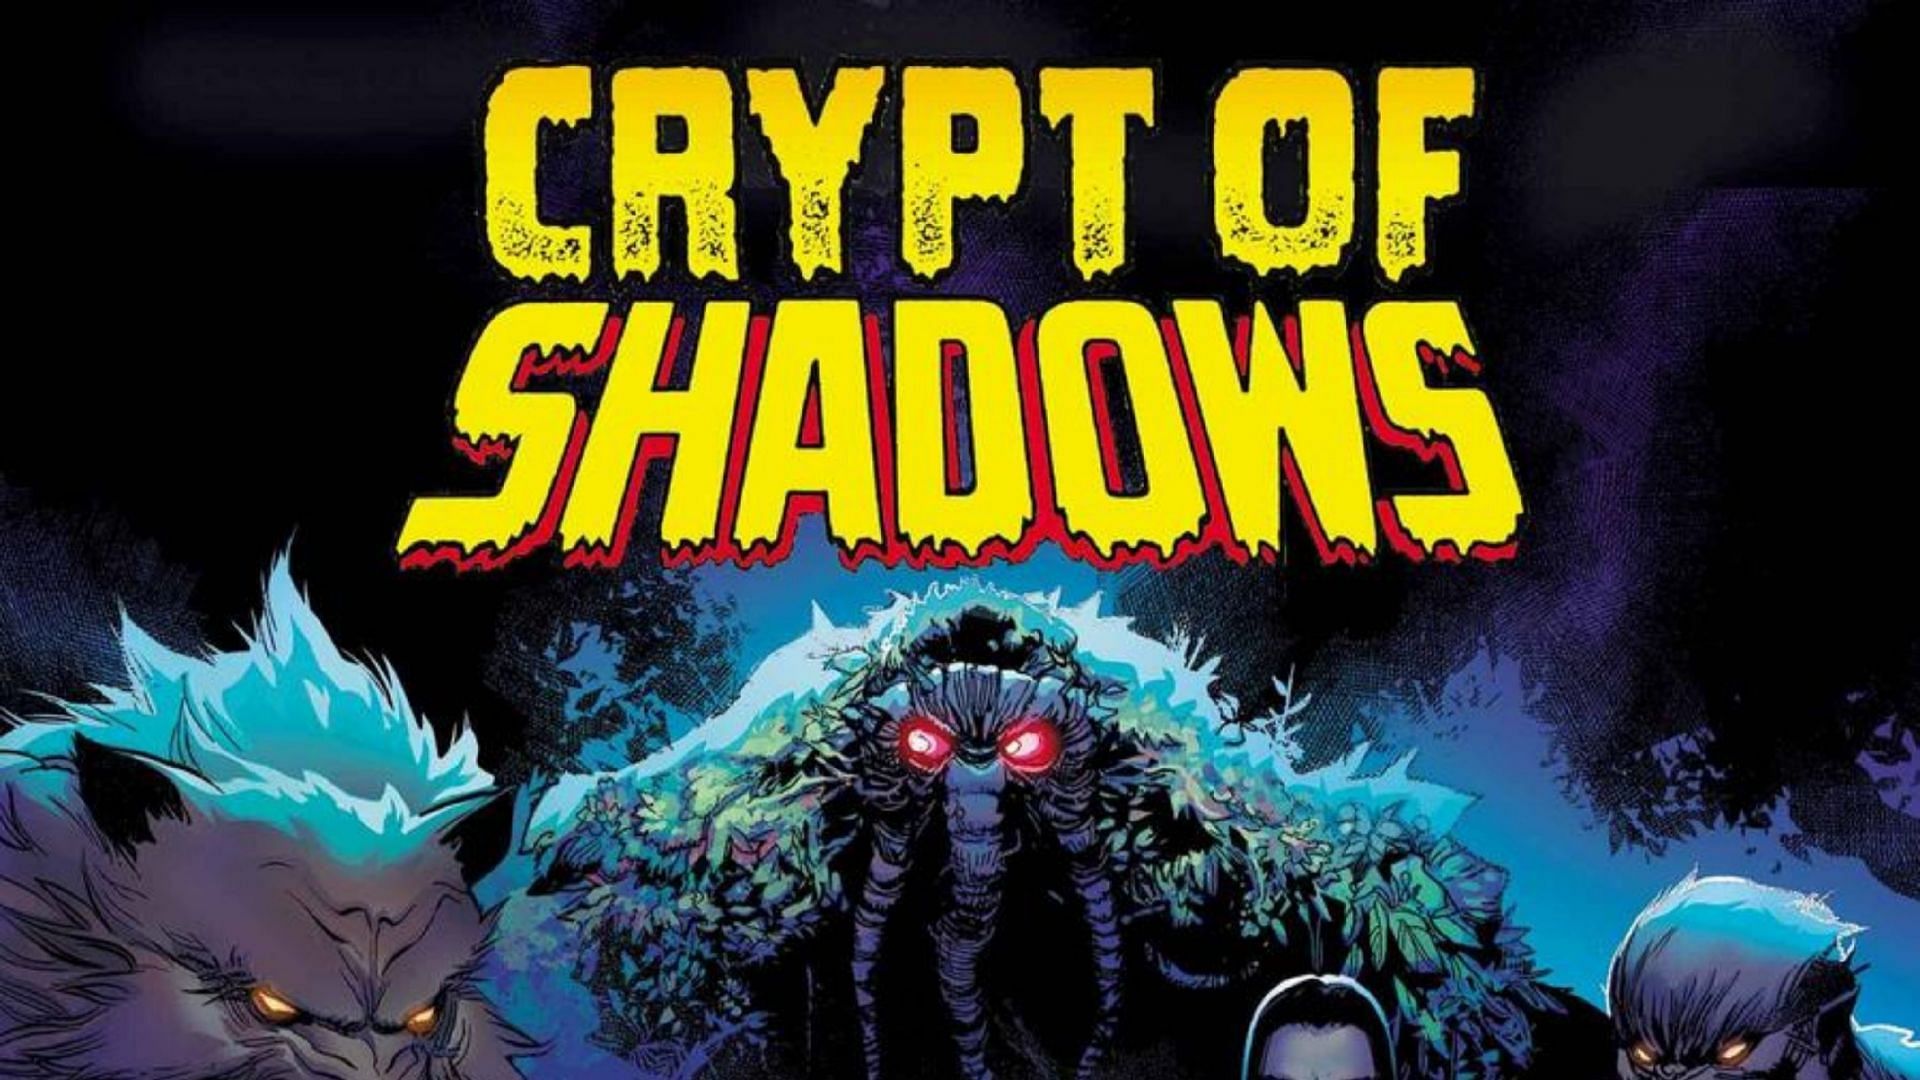 Crypt of Shadows comic cover (Image via Marvel Comics)